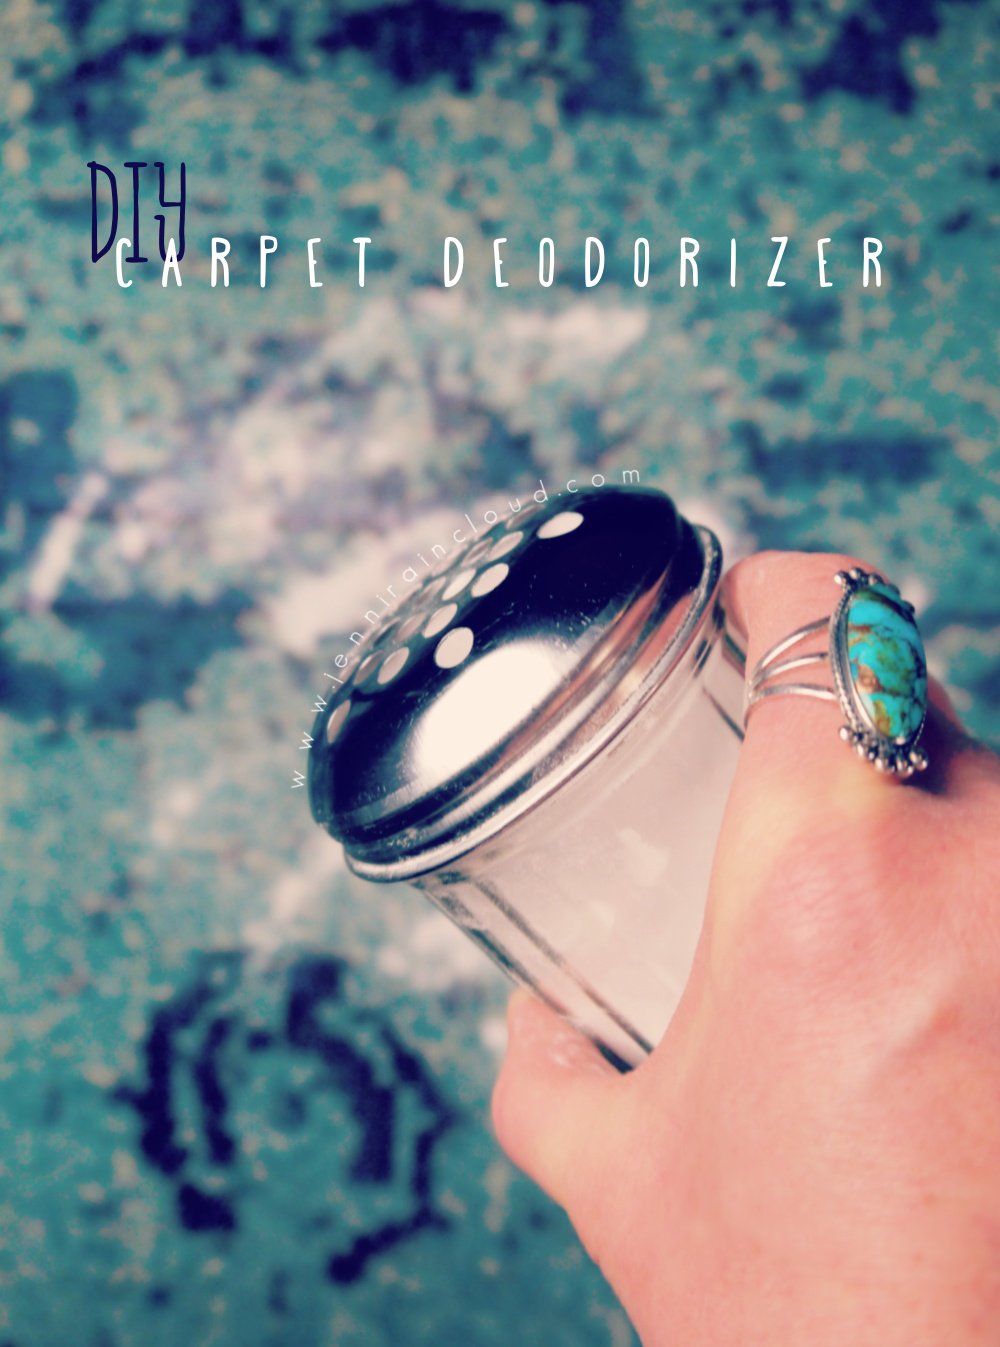 Shaker Jar with baking soda shaking over blue carpet.